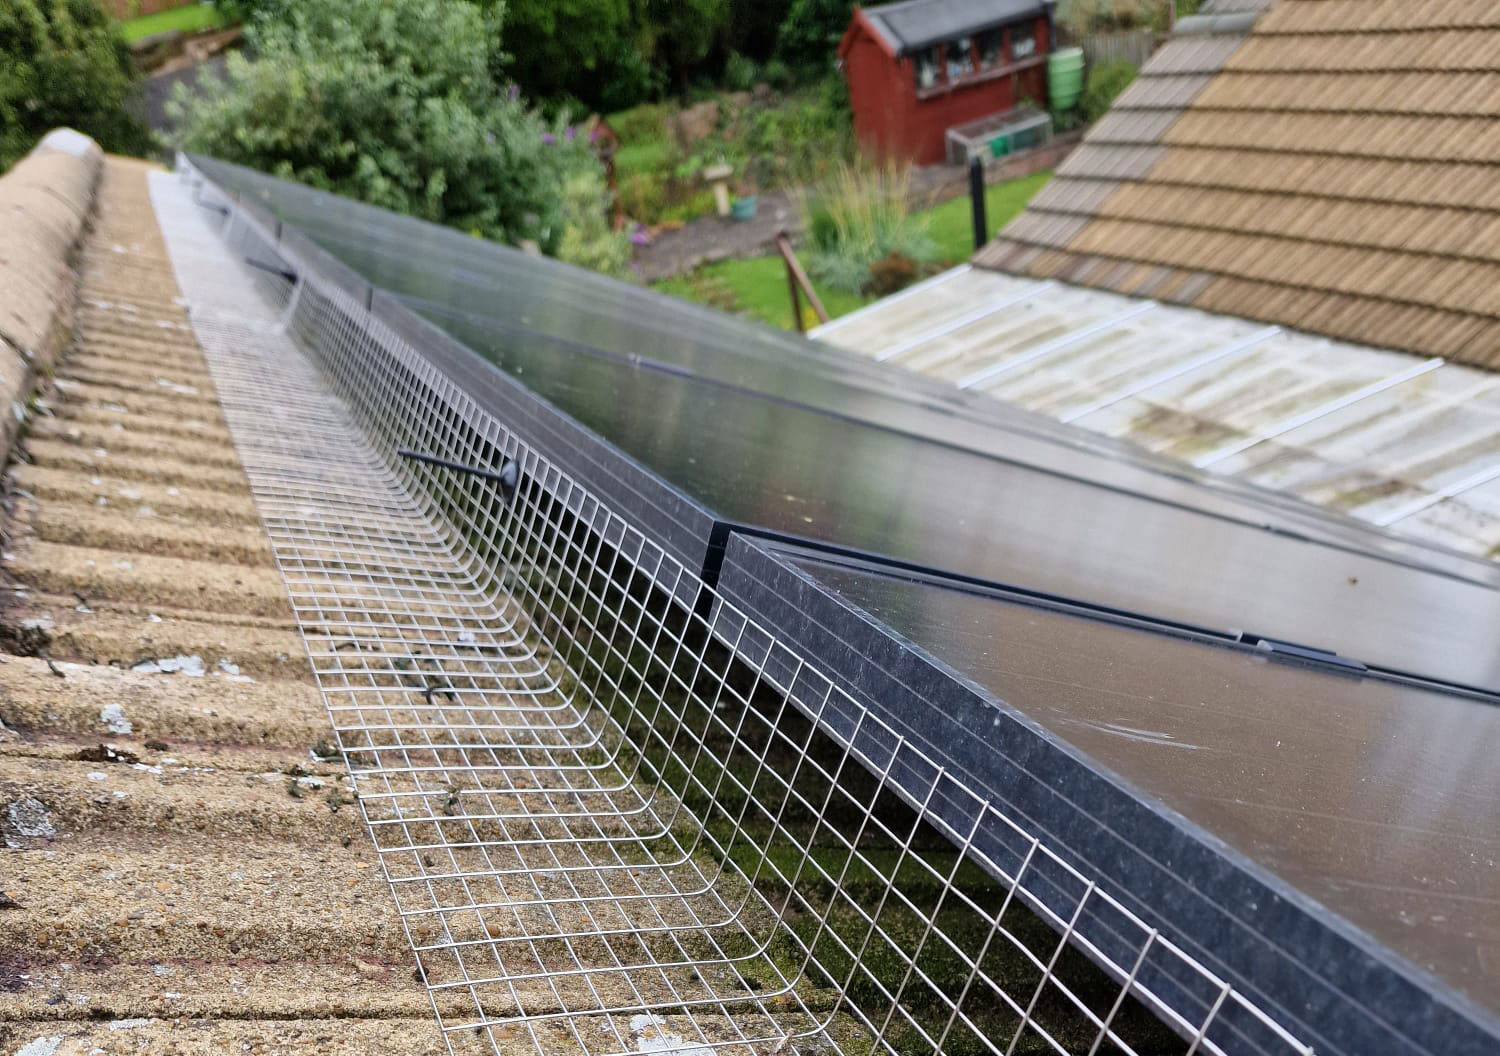 Pigeon+Proofing+Solar+Panels+in+Arnold%2C+Nottingham